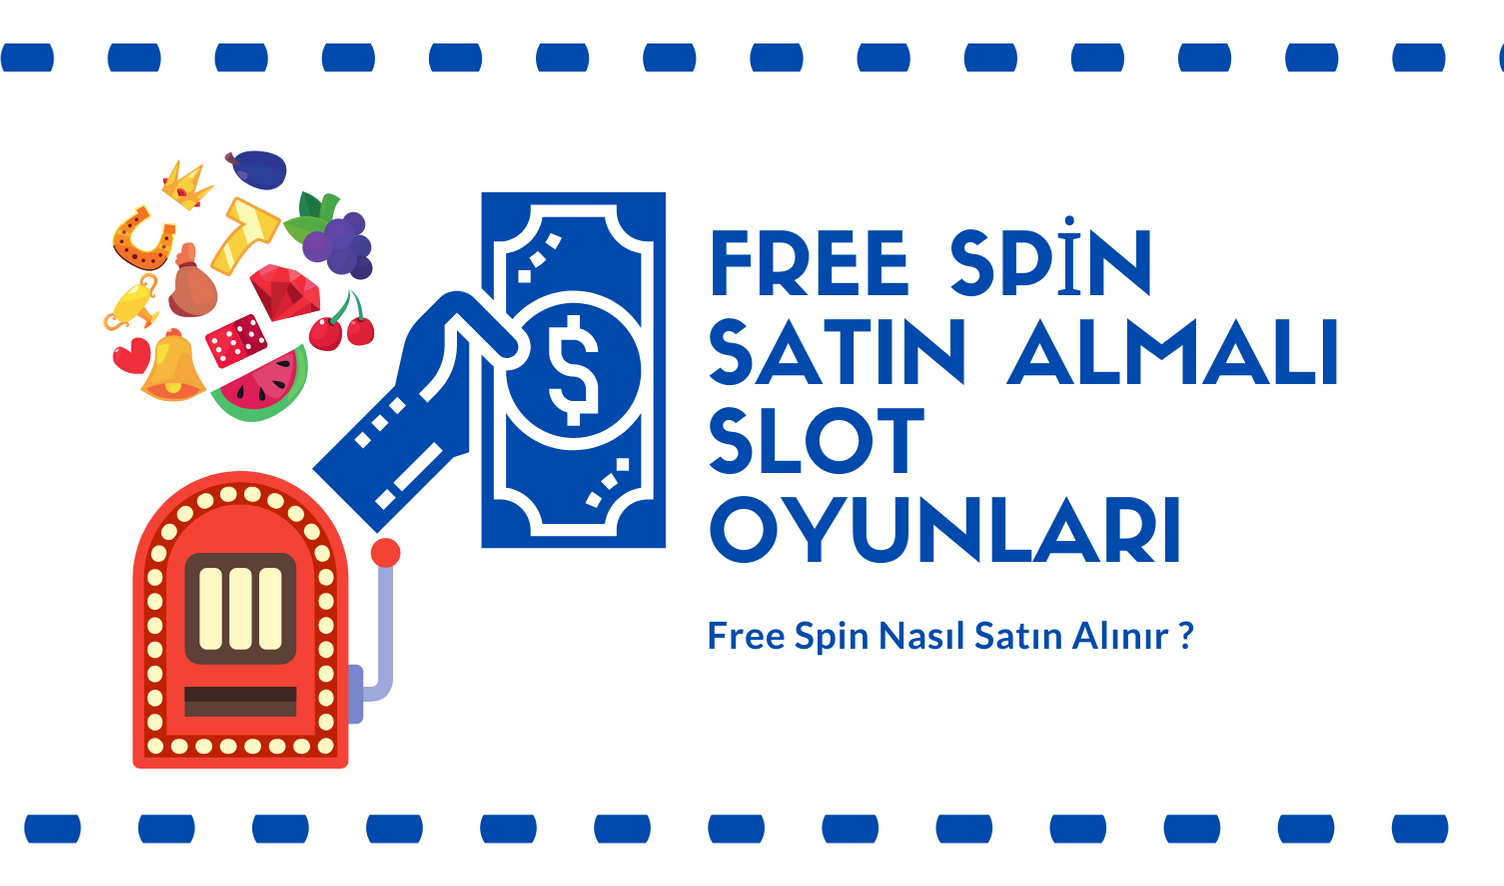 Free Spin Satın Almalı Slot Oyunları